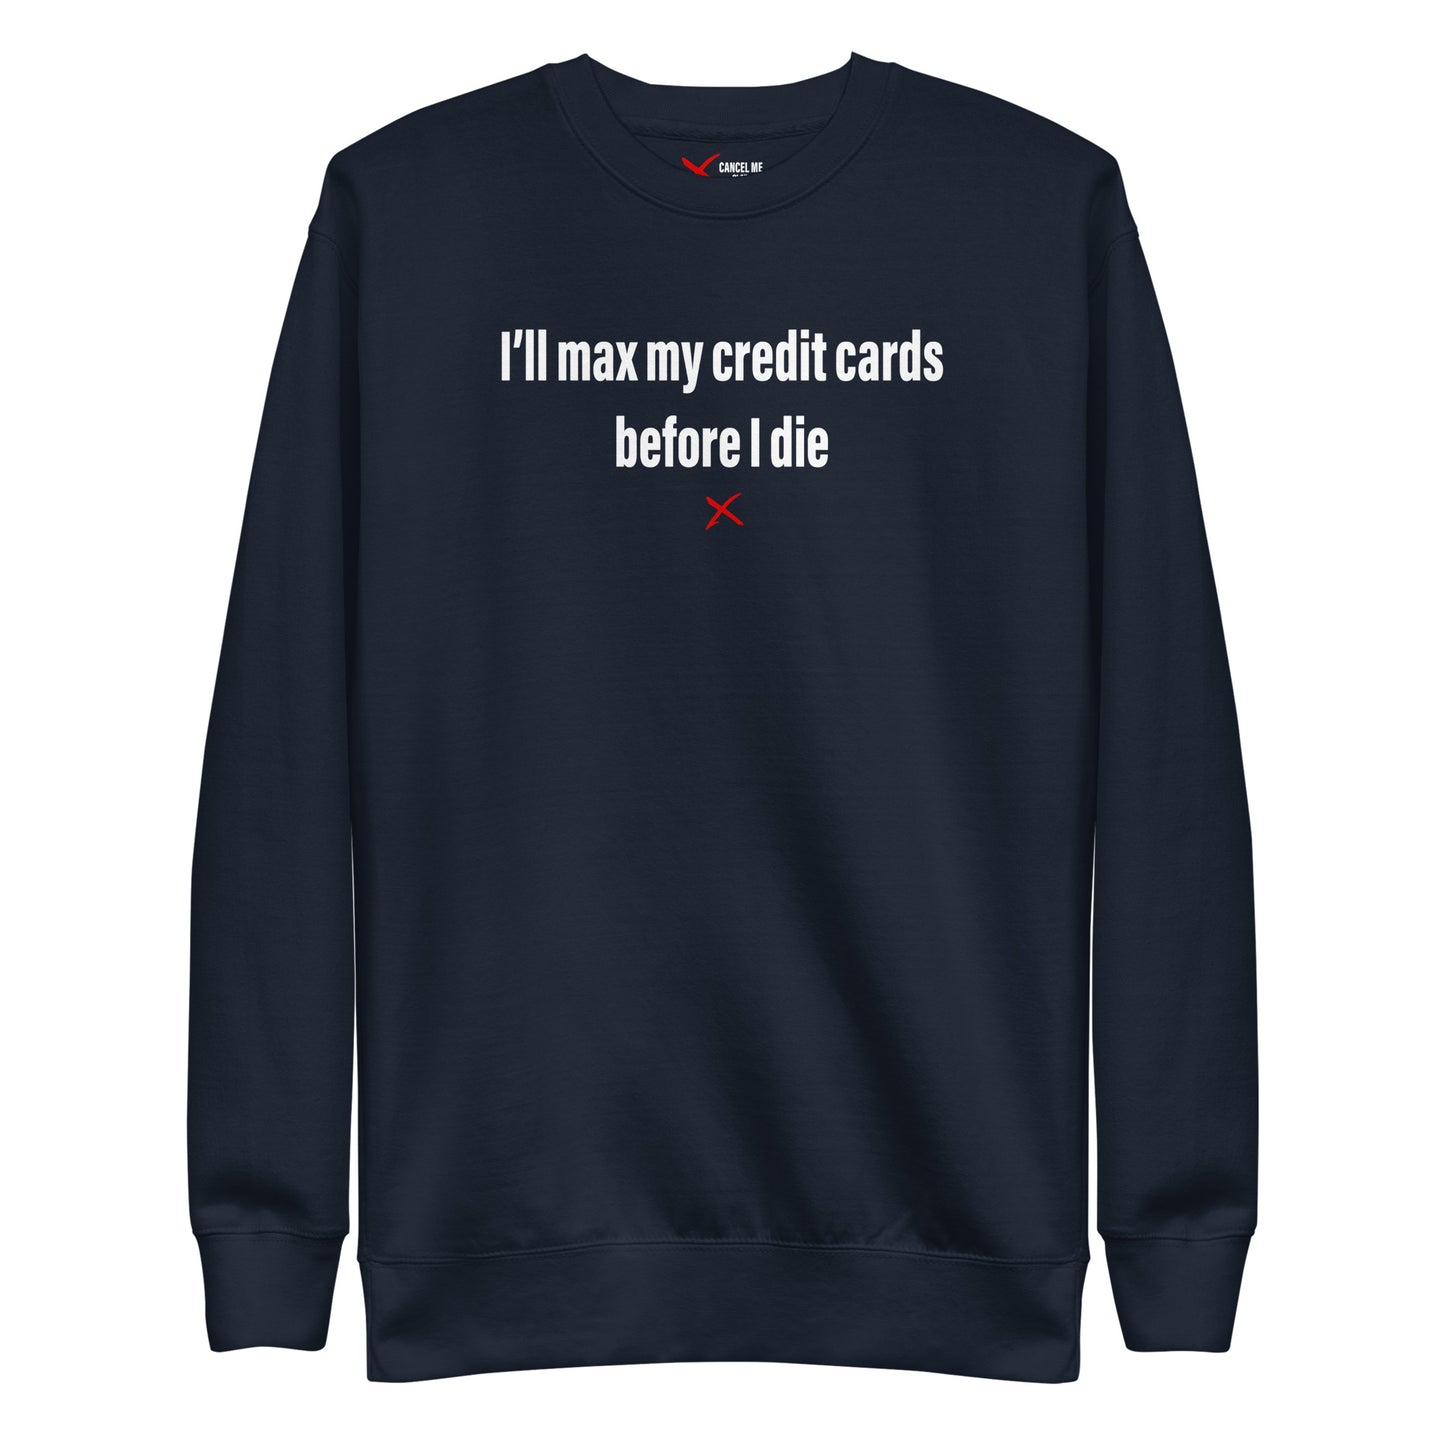 I'll max my credit cards before I die - Sweatshirt